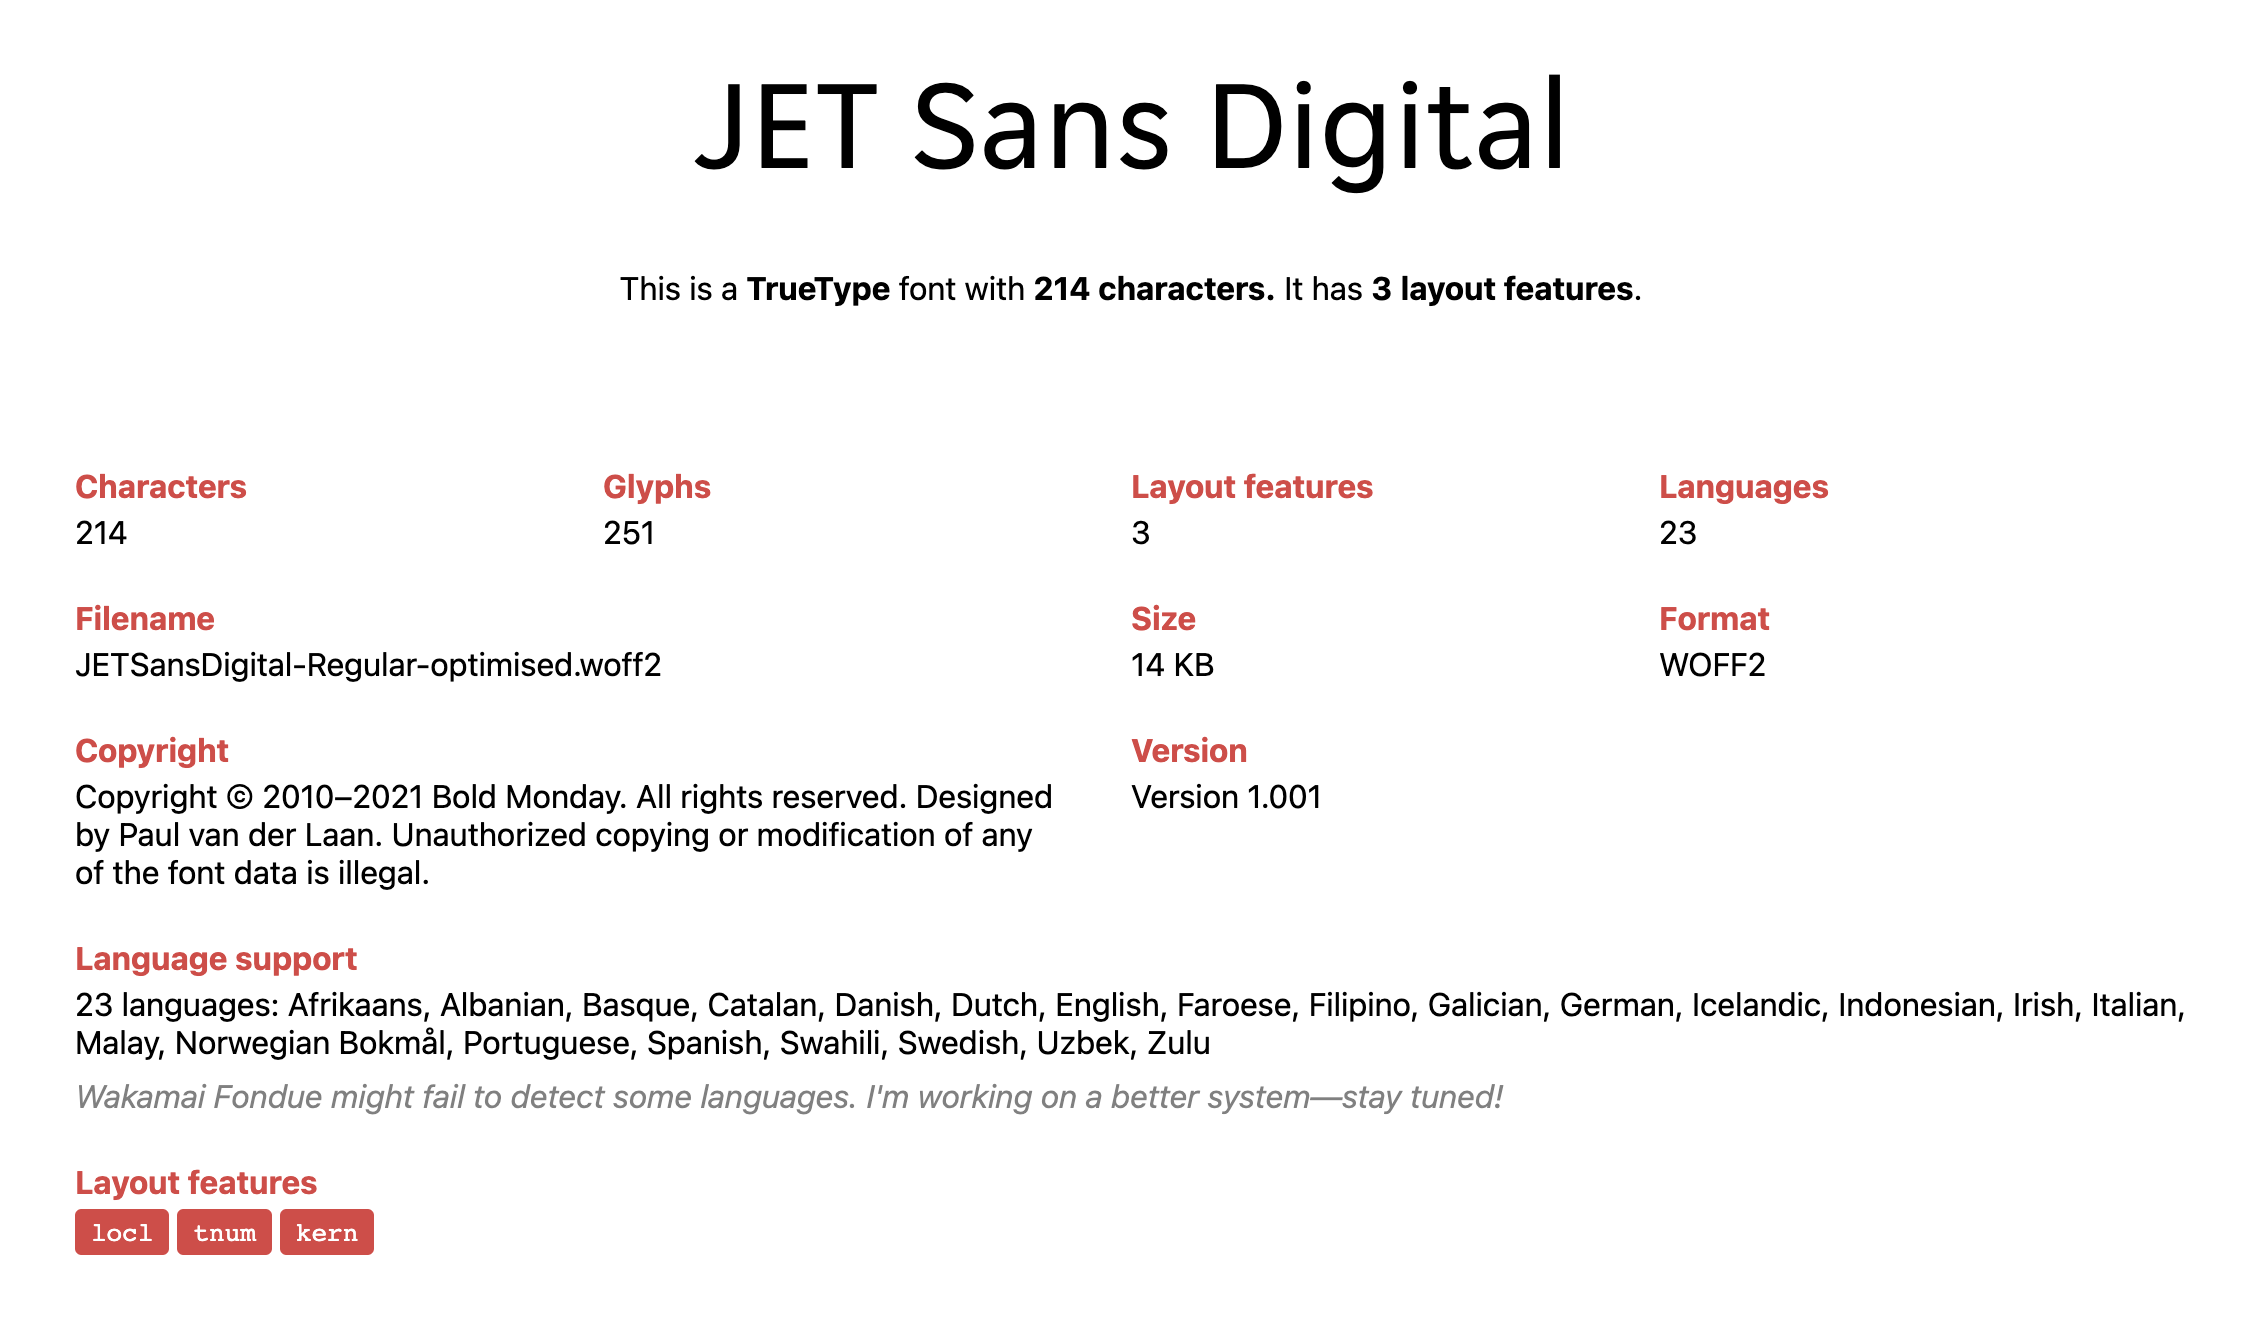 Wakamai Fondue font specification for JETSans Digital – the base subset